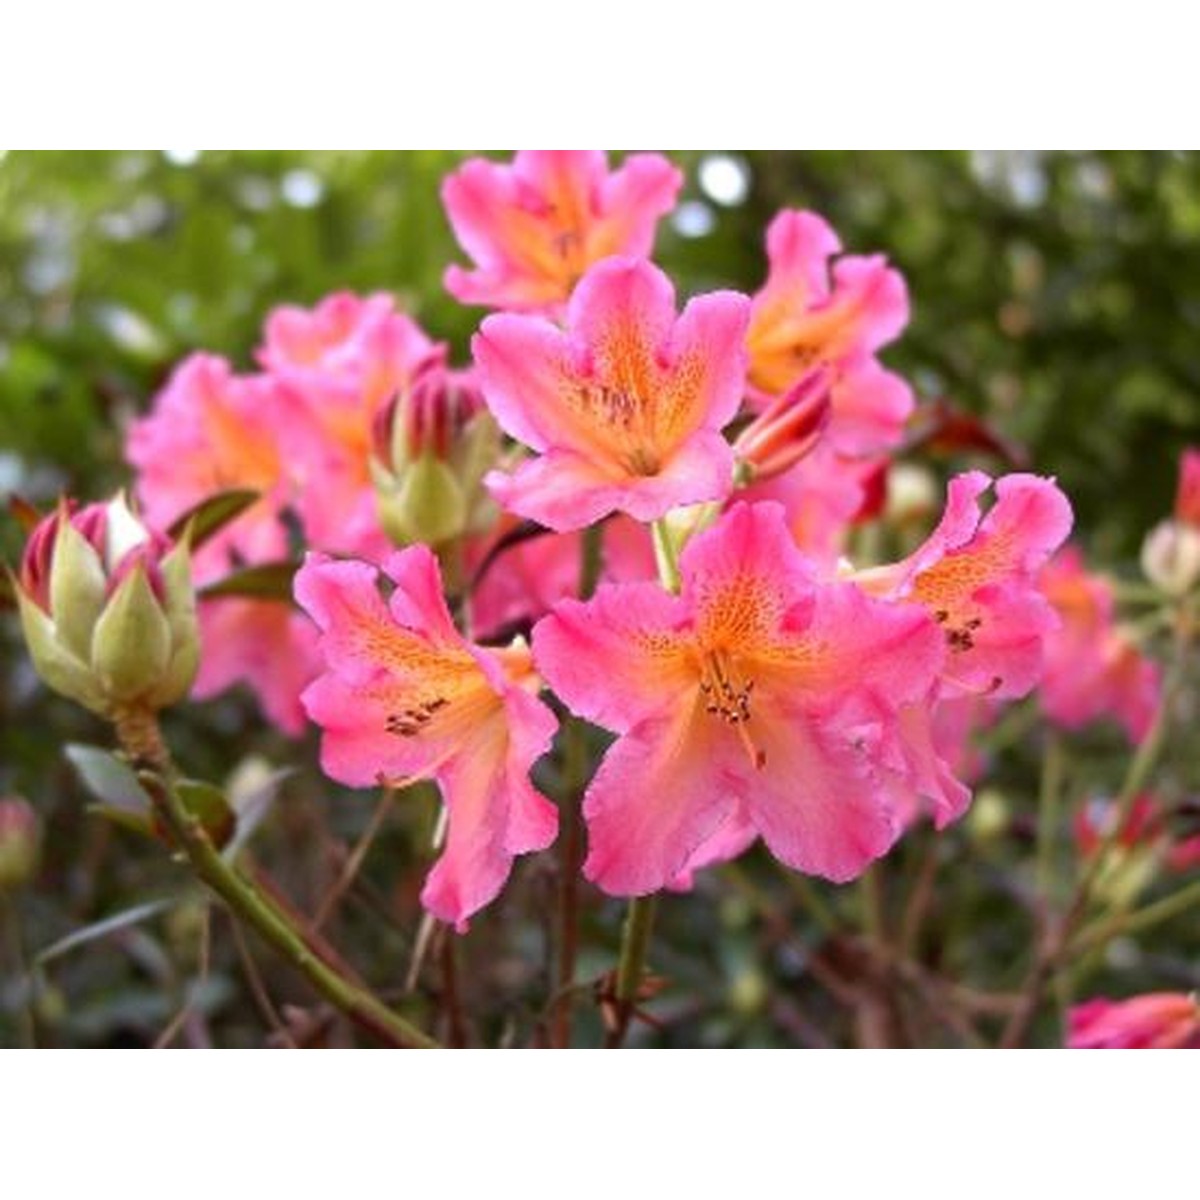   Rhododendron 'Golden Gate'  C5 40/+